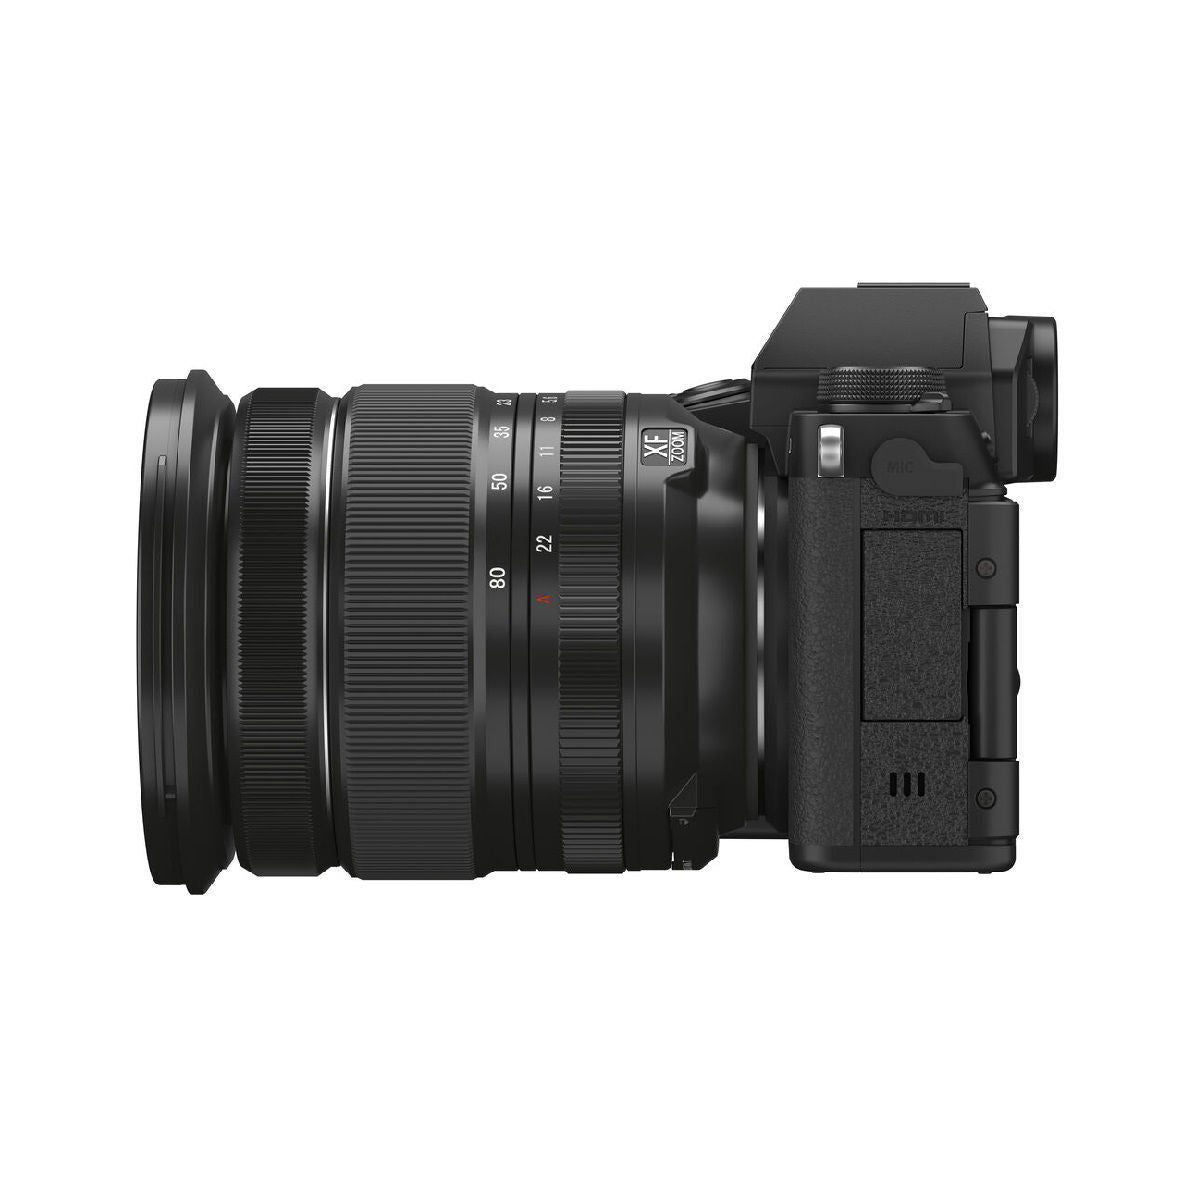 Fujifilm X S10 Mirrorless Digital Camera With 16 80mm Lens